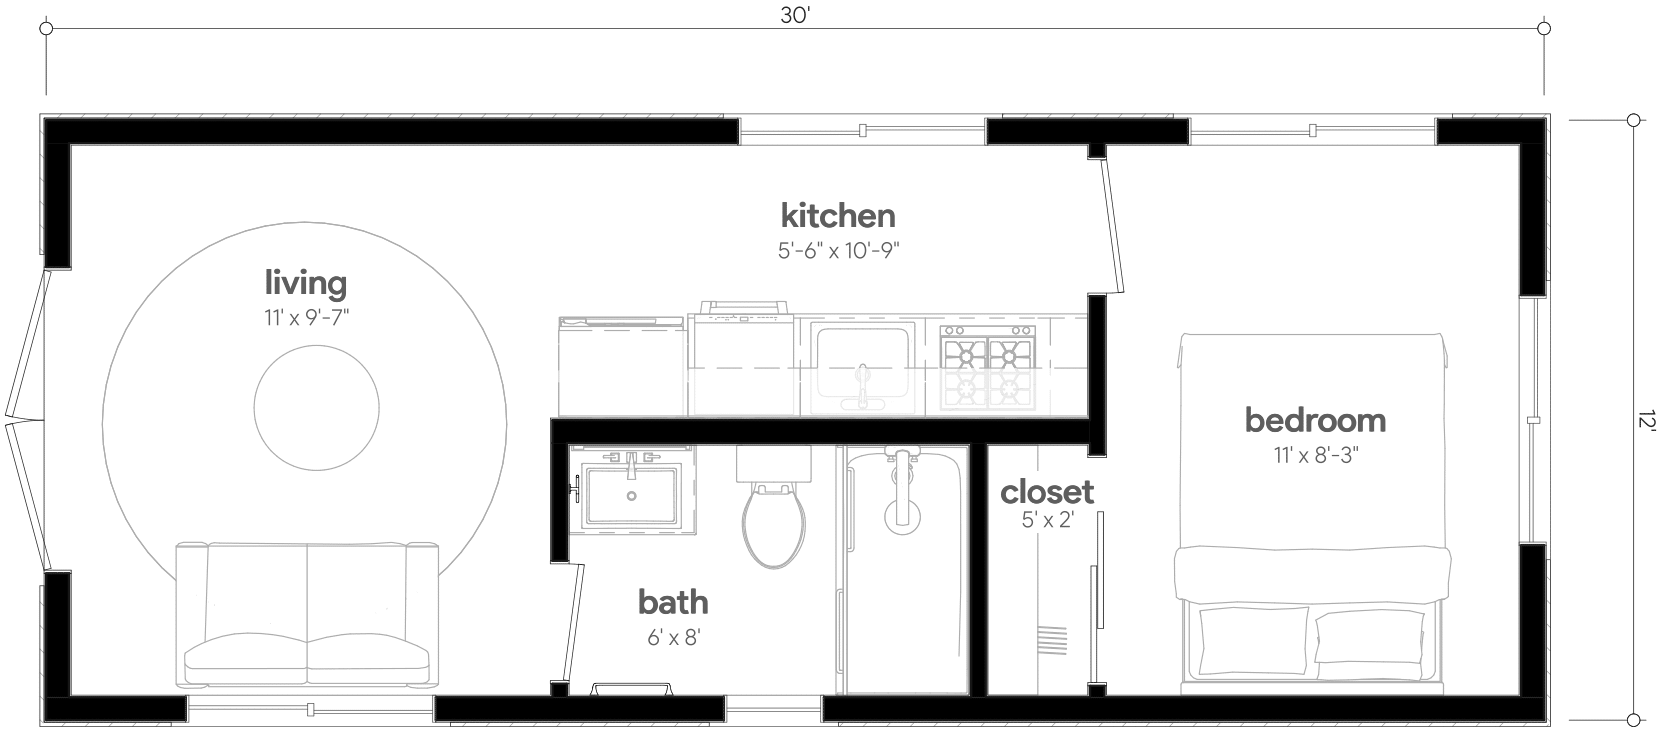 Anchored Tiny Homes model B-360 dimensions.